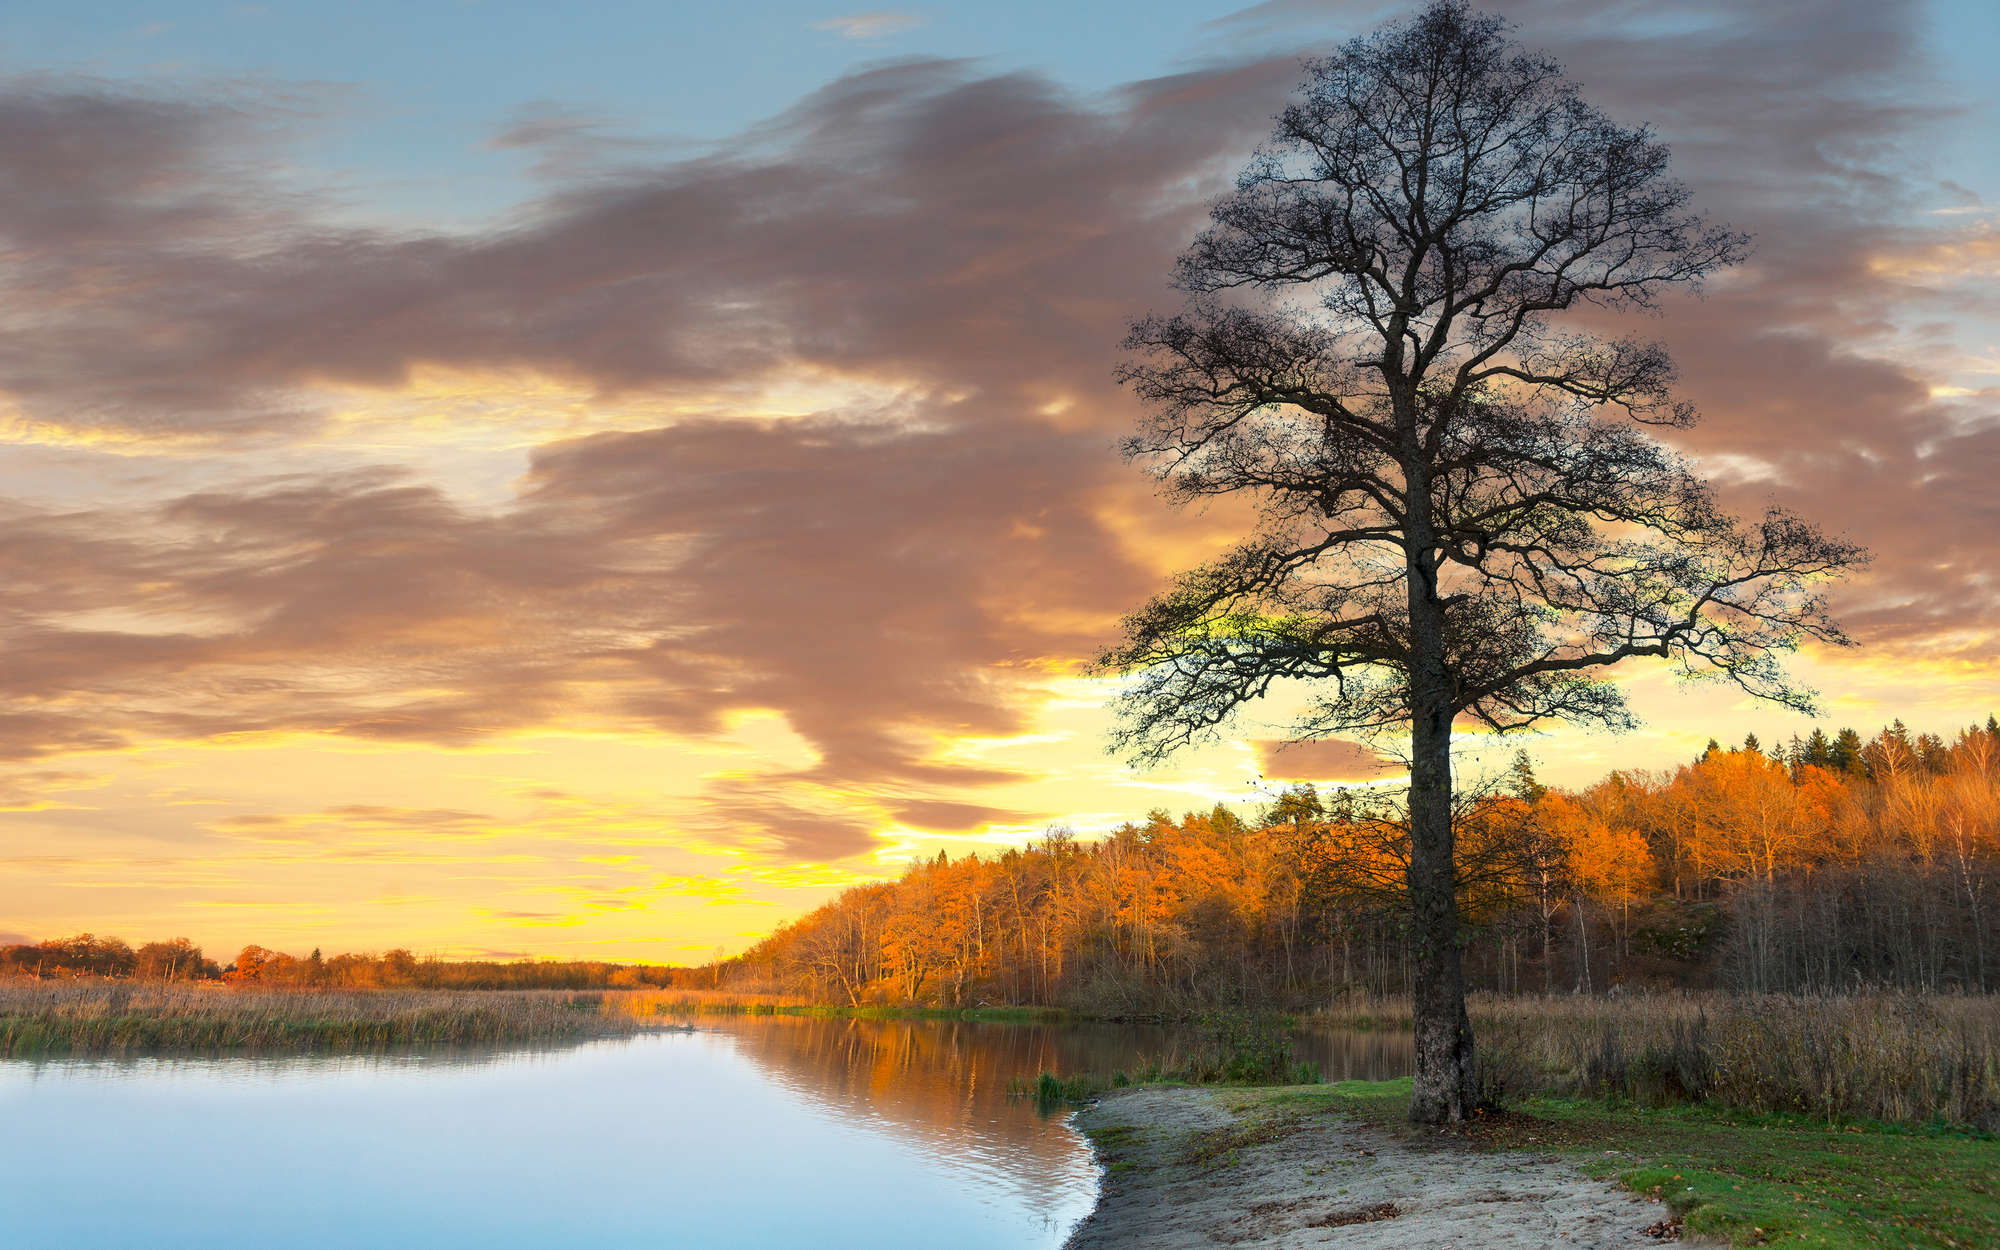             Fototapete Wald und Baum am Seeufer – Perlmutt Glattvlies
        